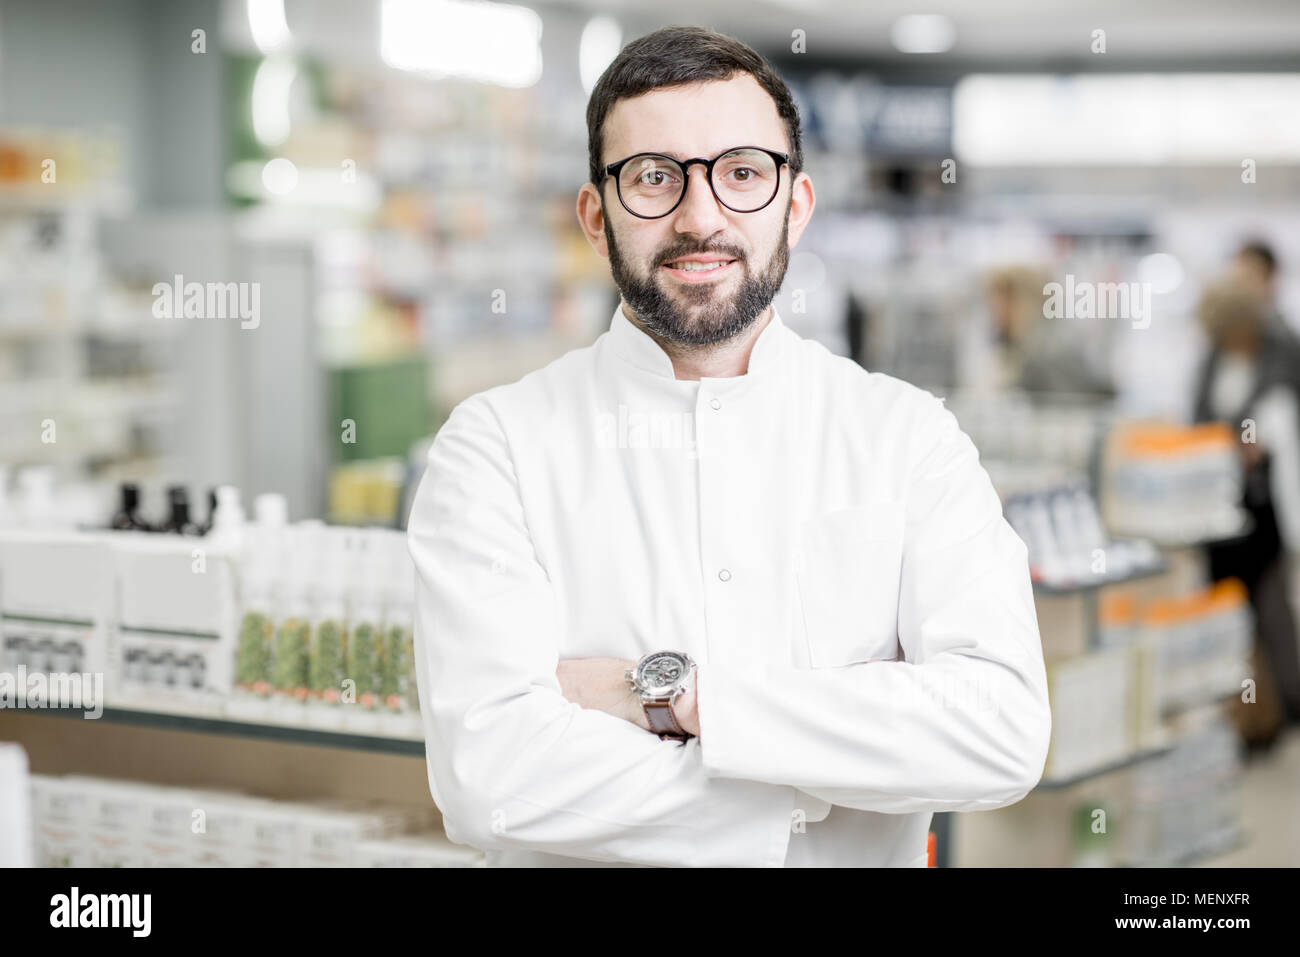 Pharmacist portrait in the pharmacy store Stock Photo